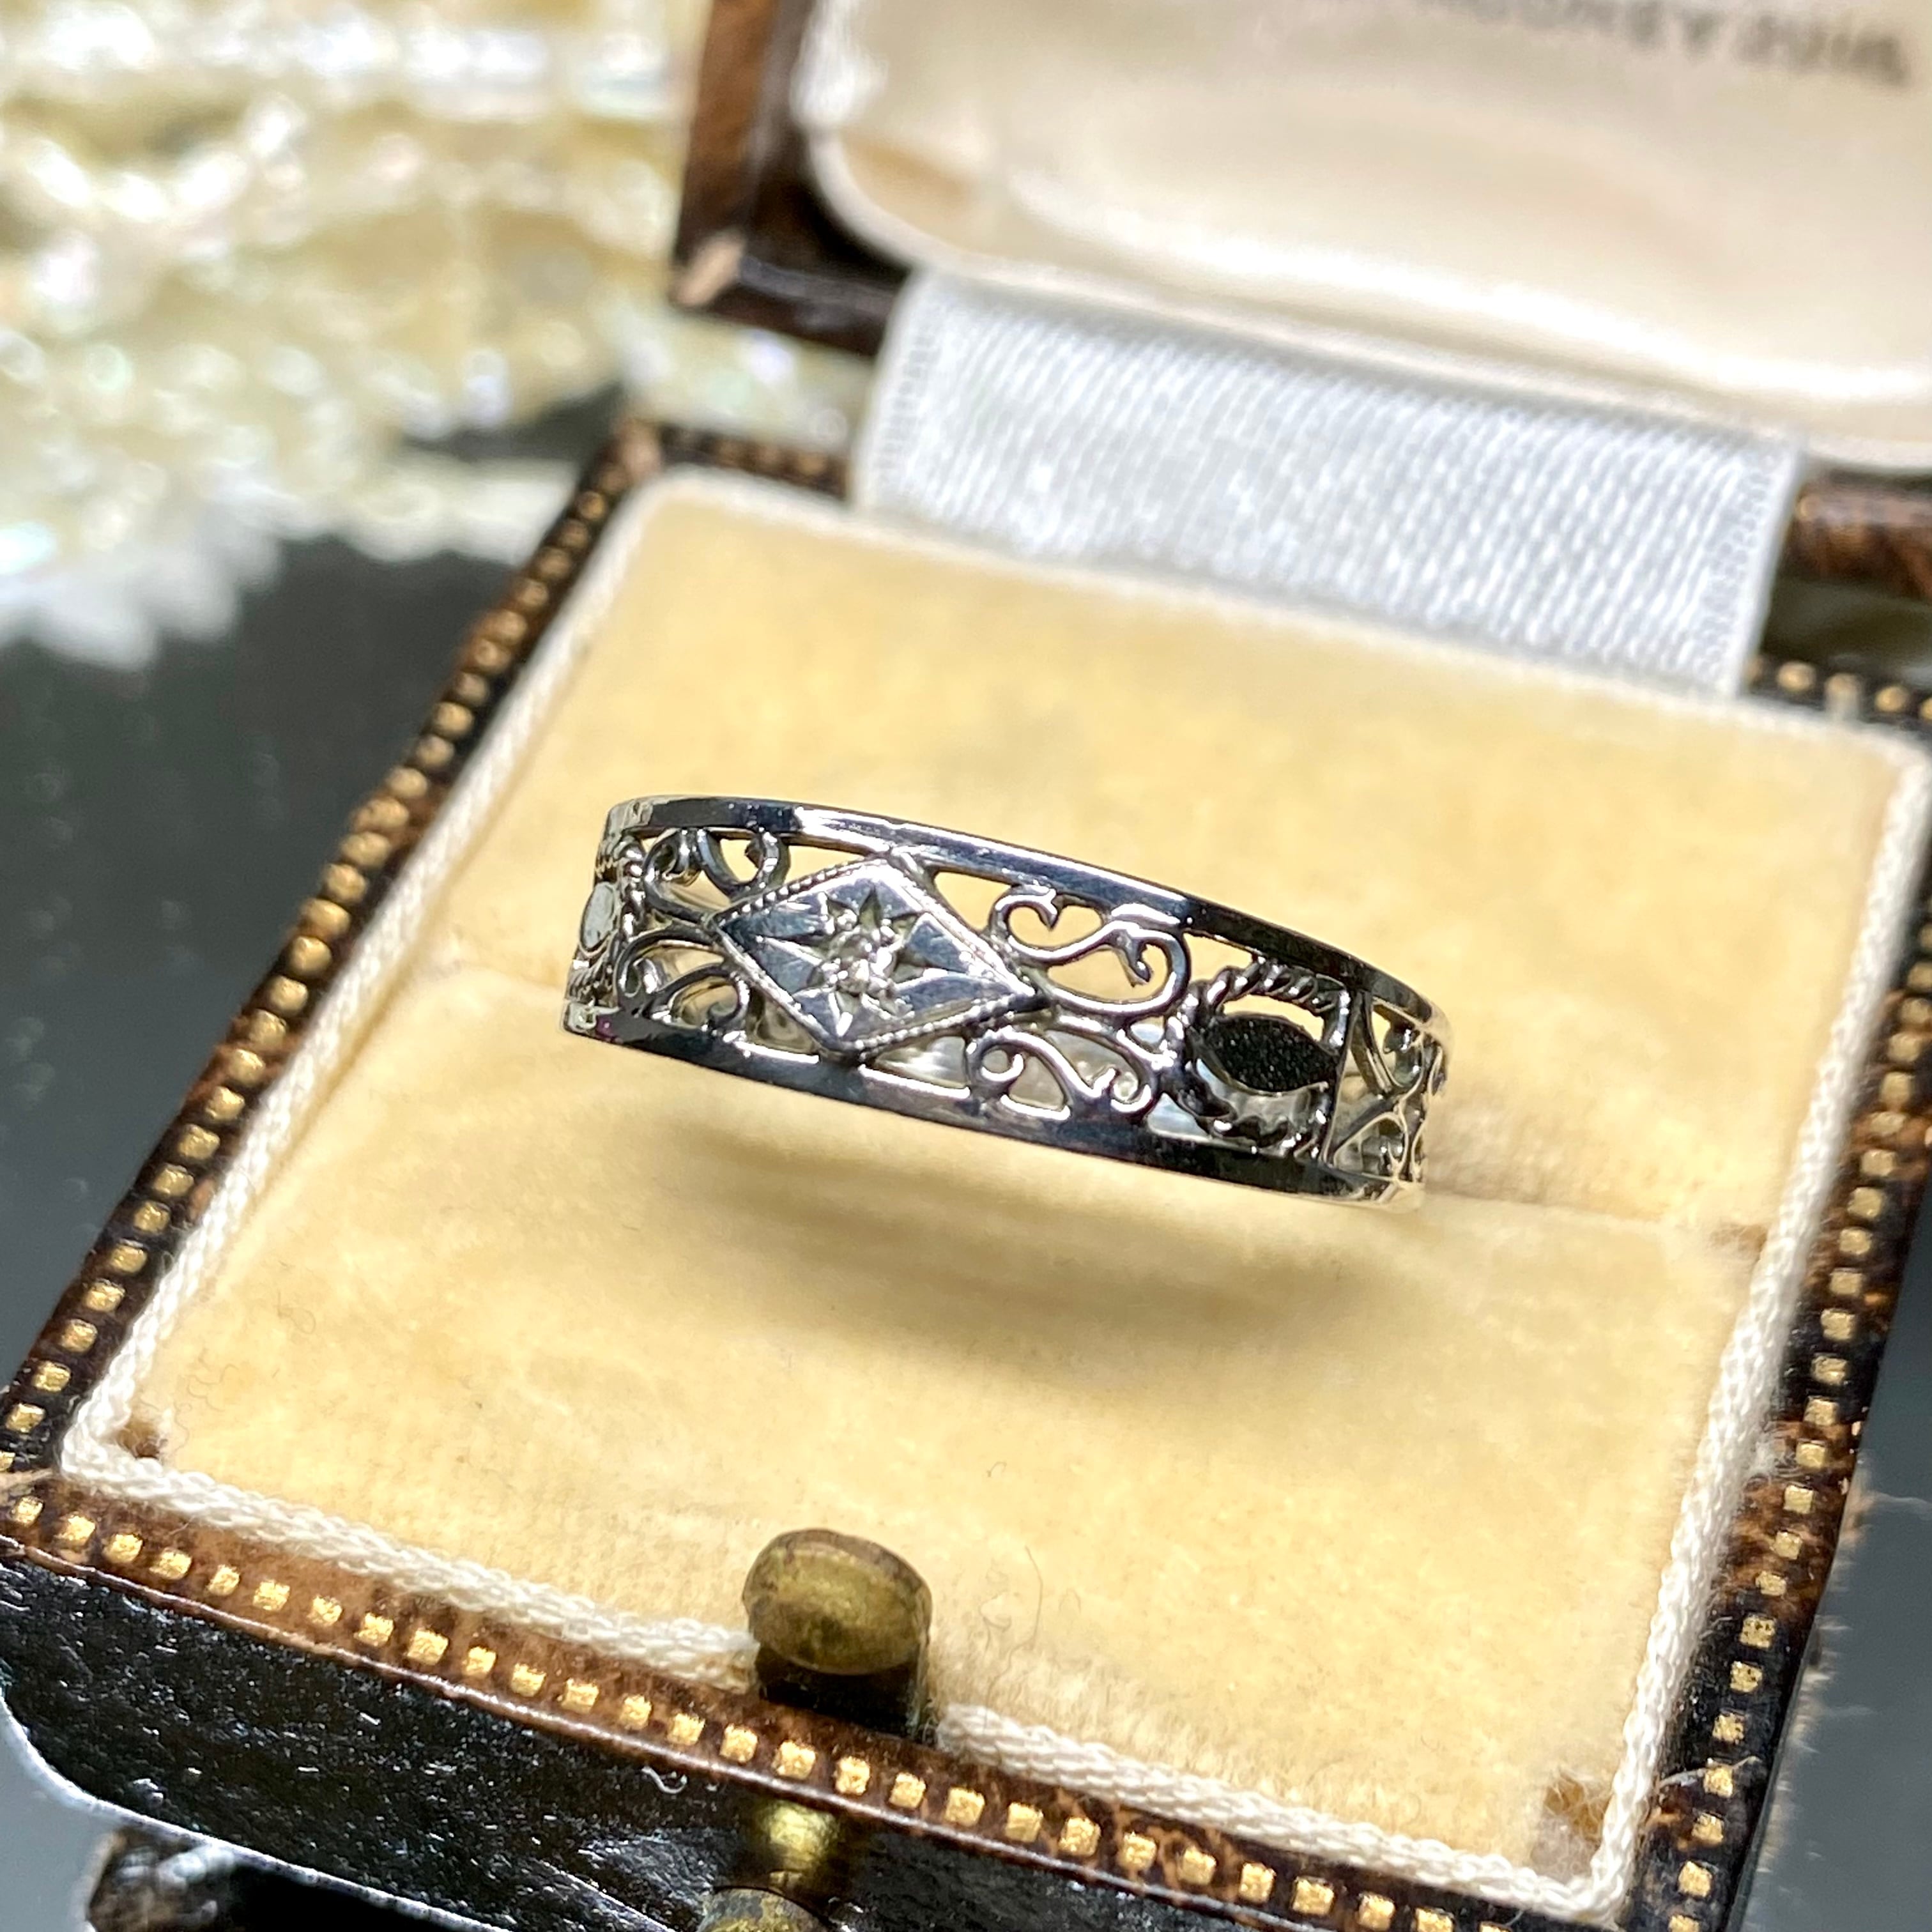 【Japanese traditional ring】昭和レトロリング レースのような透かしデザインがエレガントな指輪